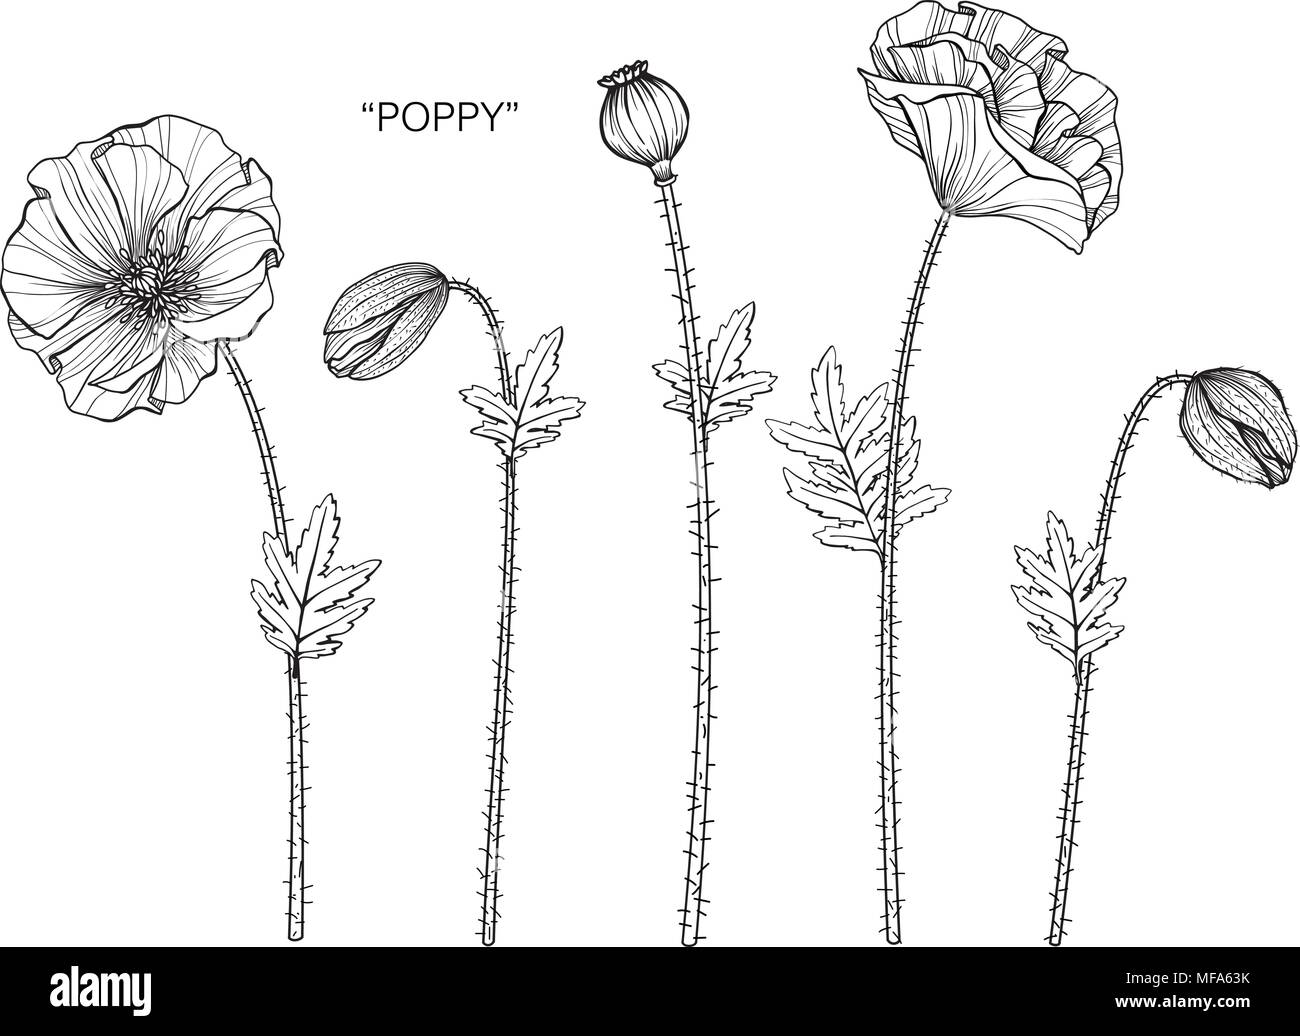 45,465 Poppy Flower Black Images, Stock Photos, 3D objects, & Vectors